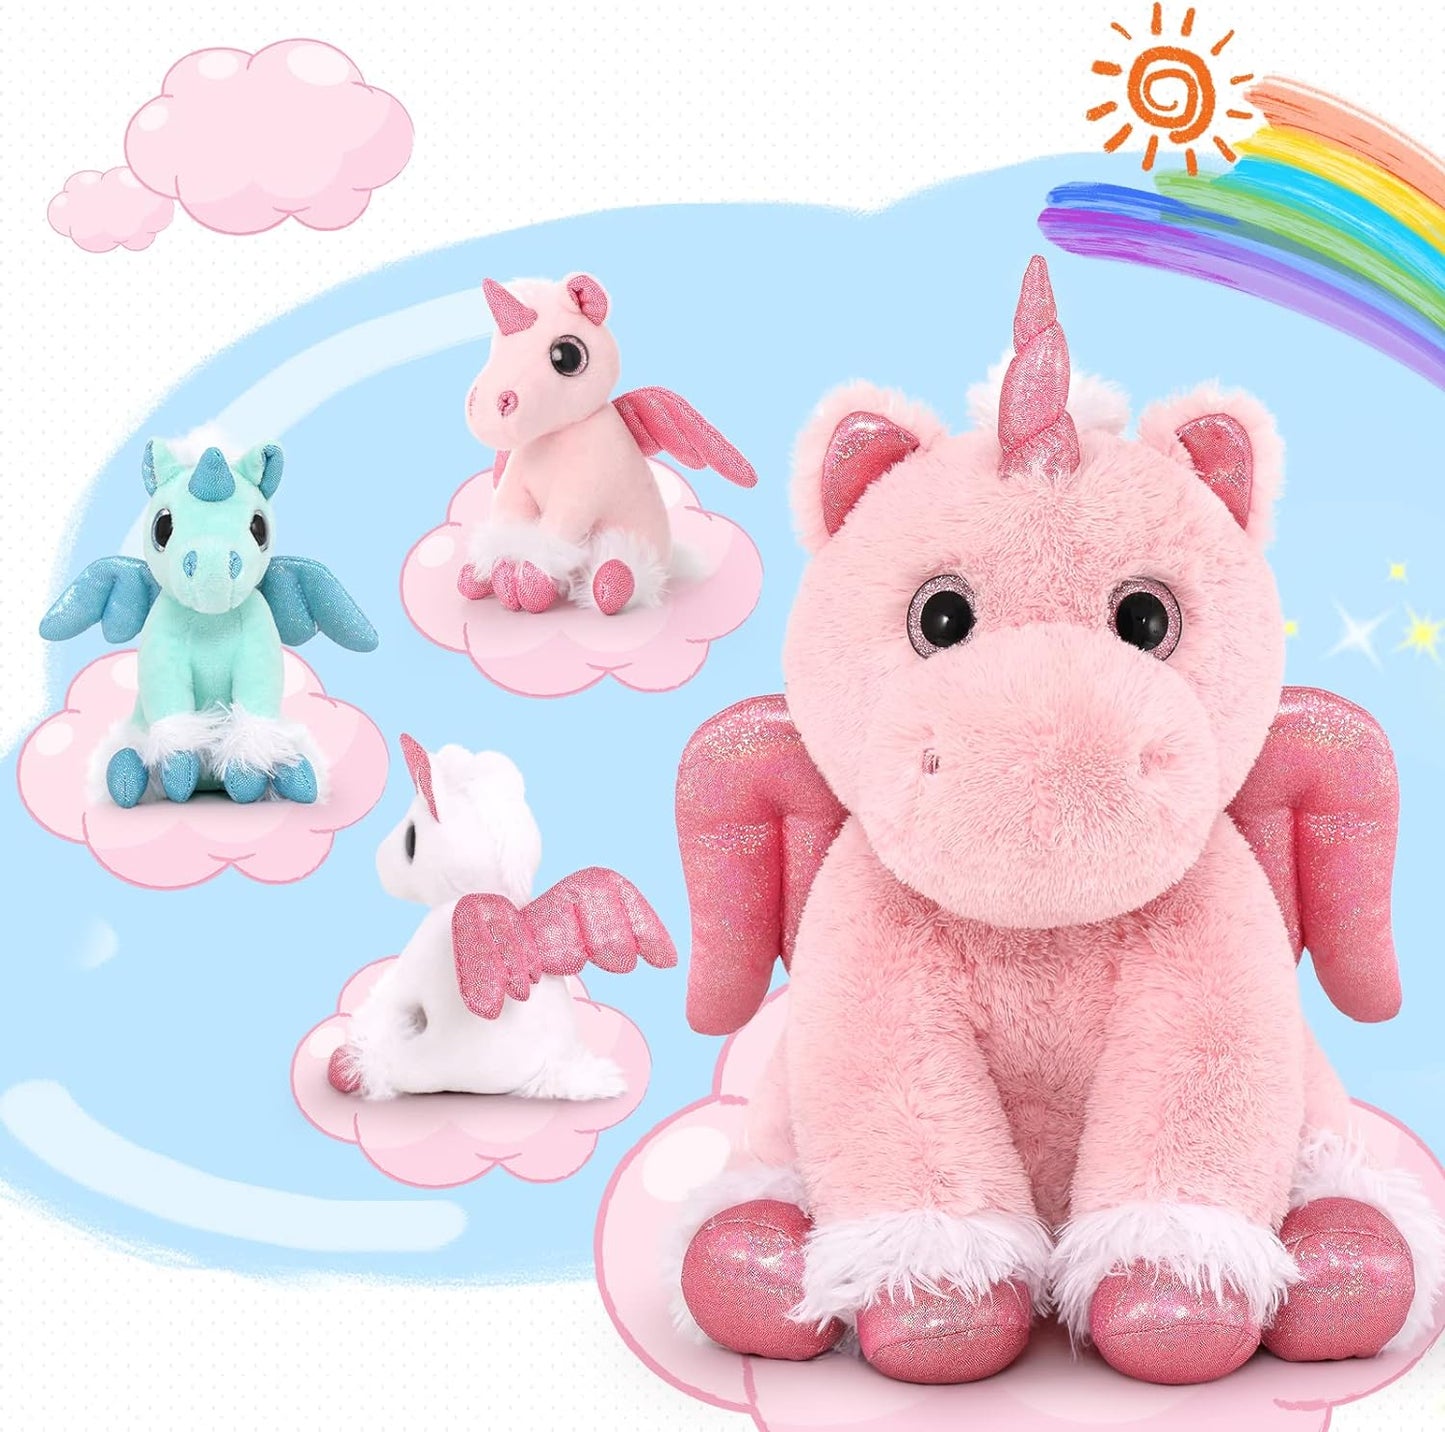 Magical Unicorn Plush Toy Set, Pink, 19.7 Inches